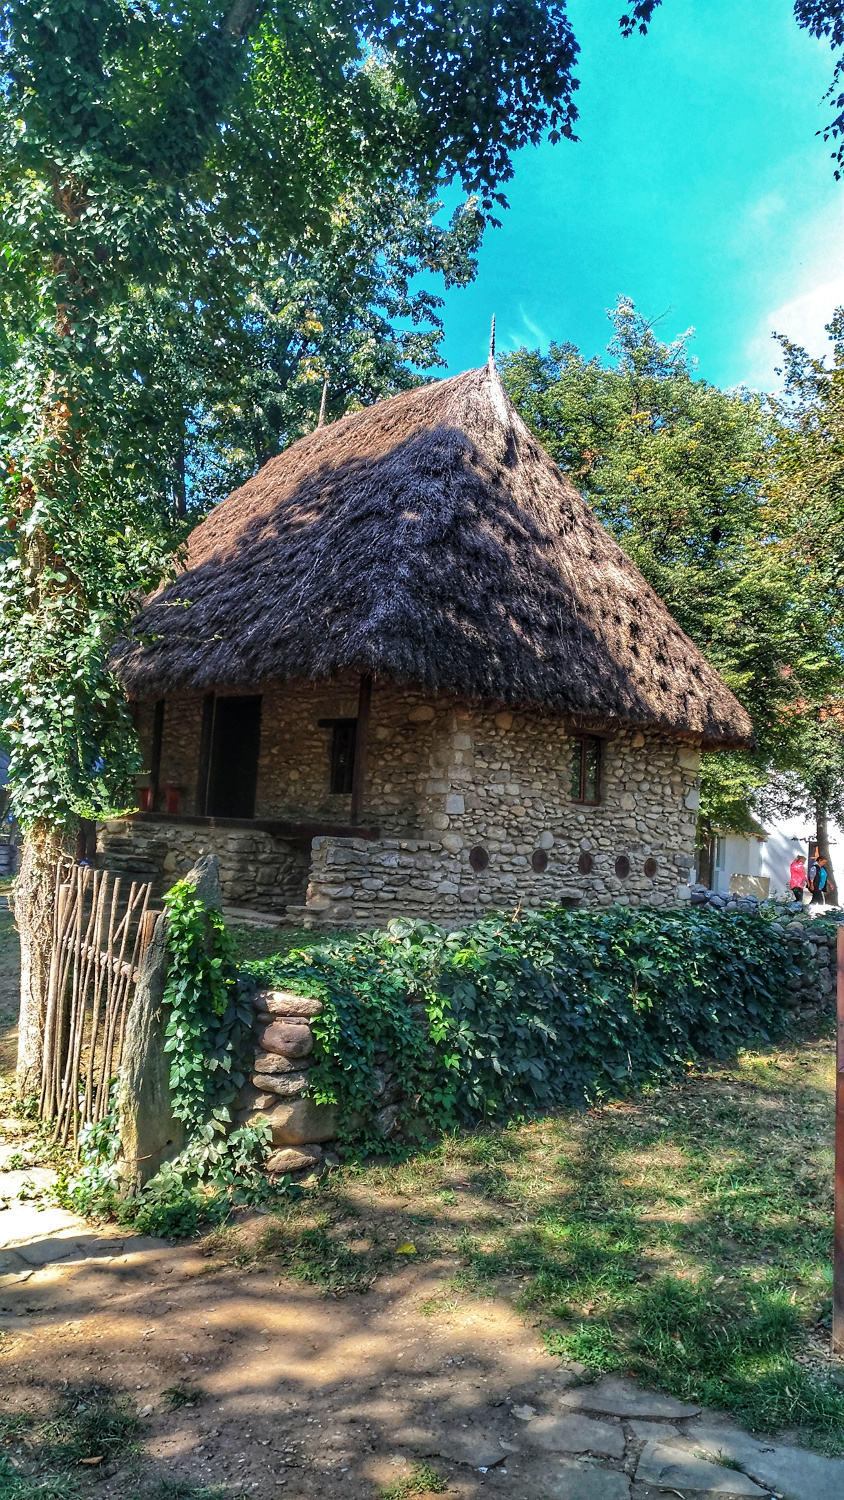 House - The Dimitrie Gusti Village Museum, Bucharest